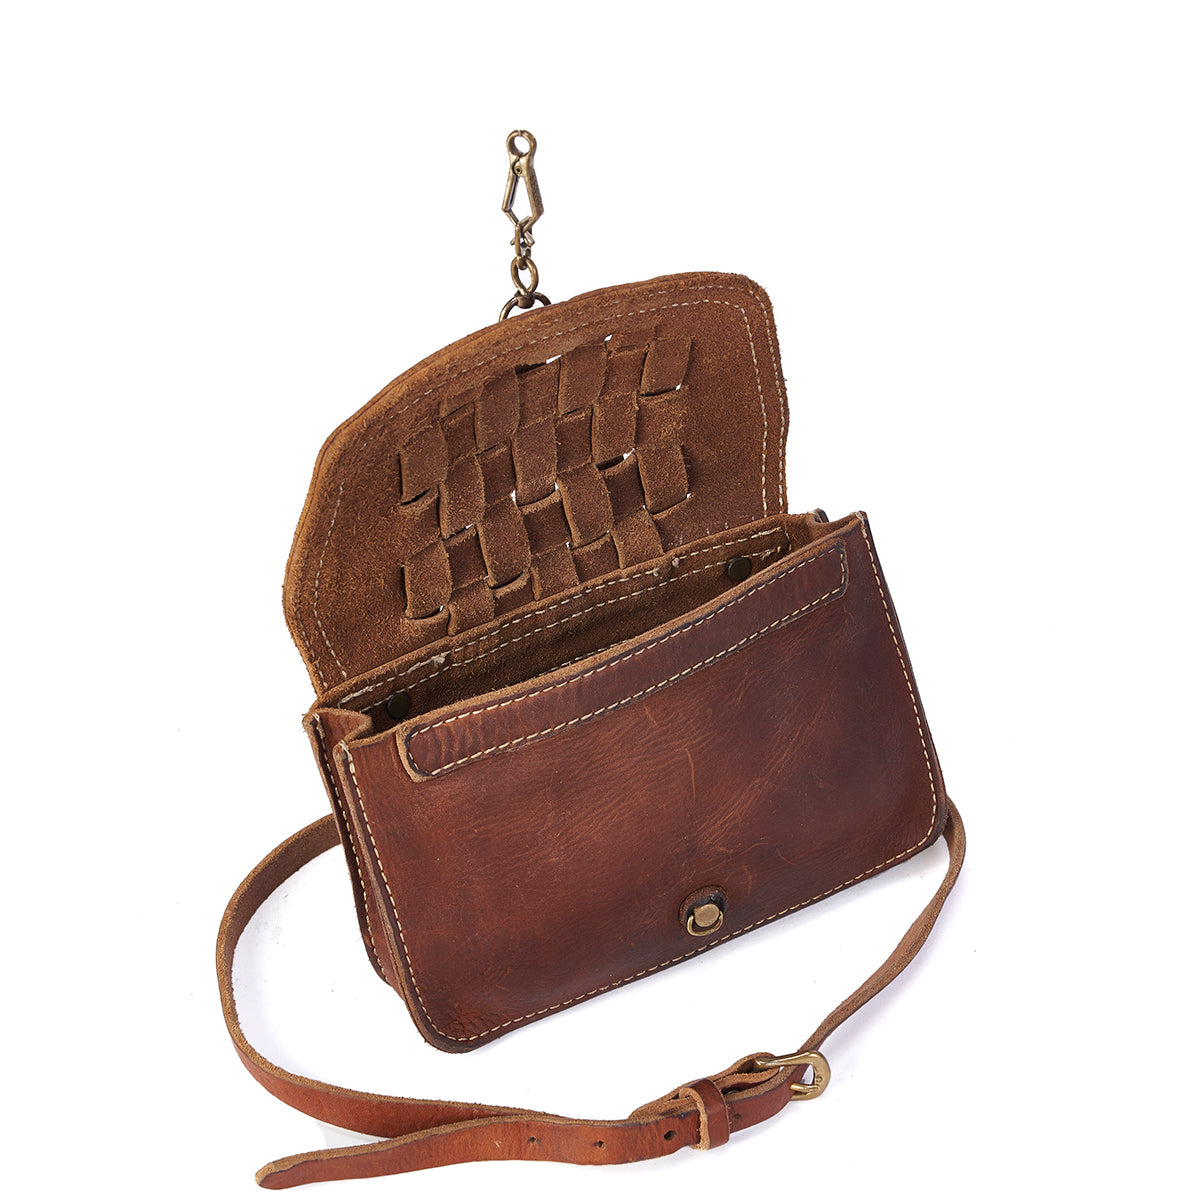 Vintage braided leather clutch bag